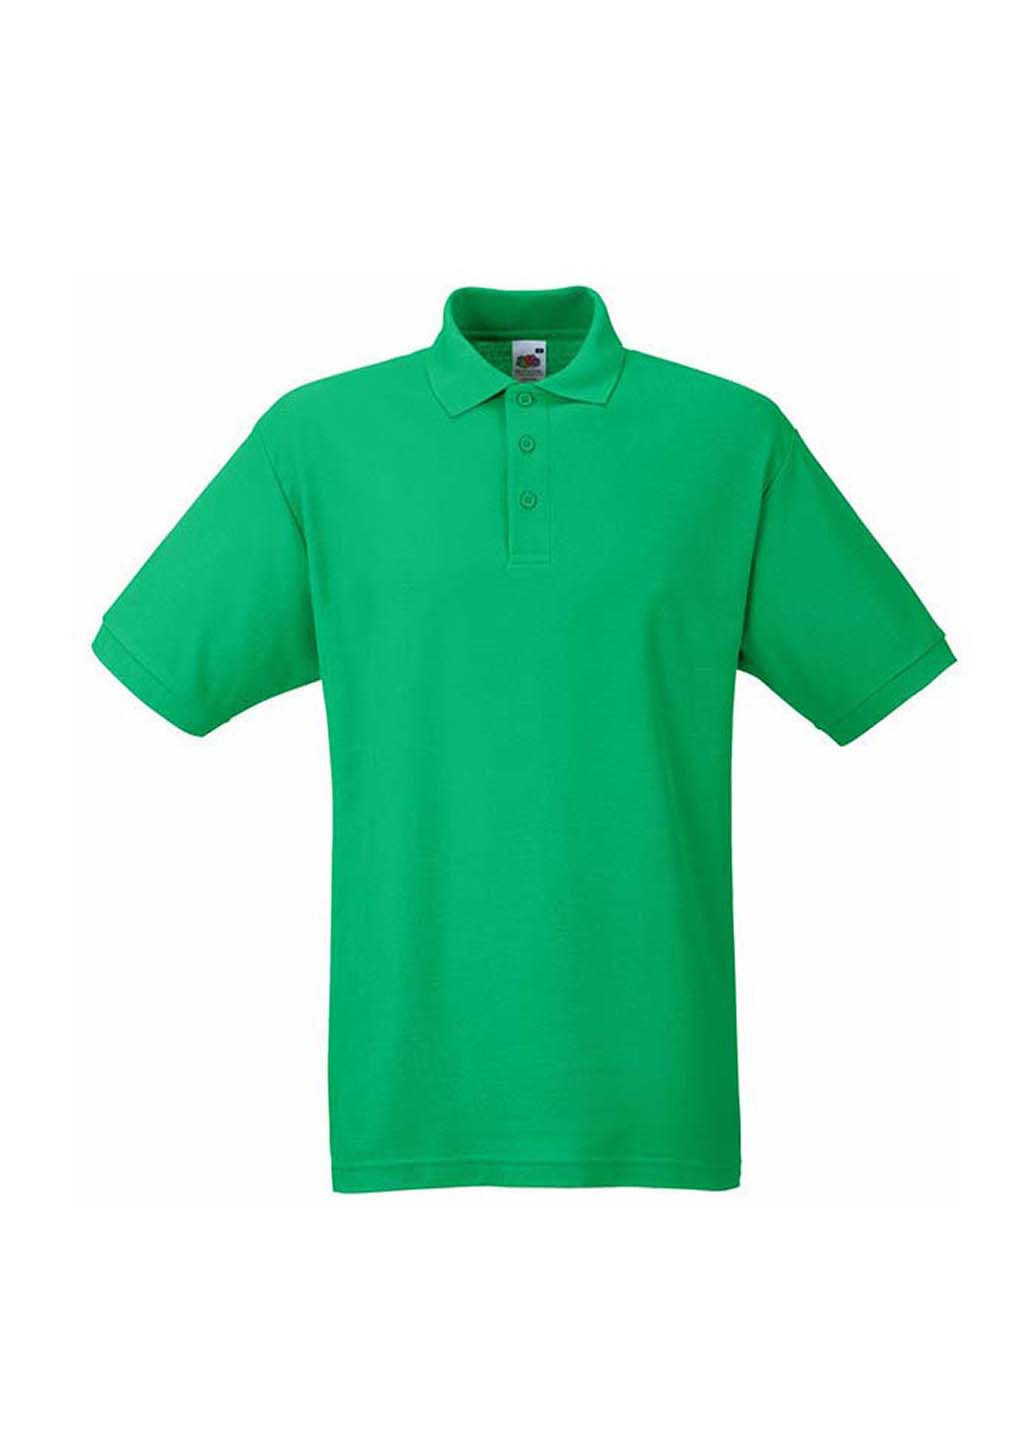 Зеленая футболка-поло для мужчин Fruit of the Loom